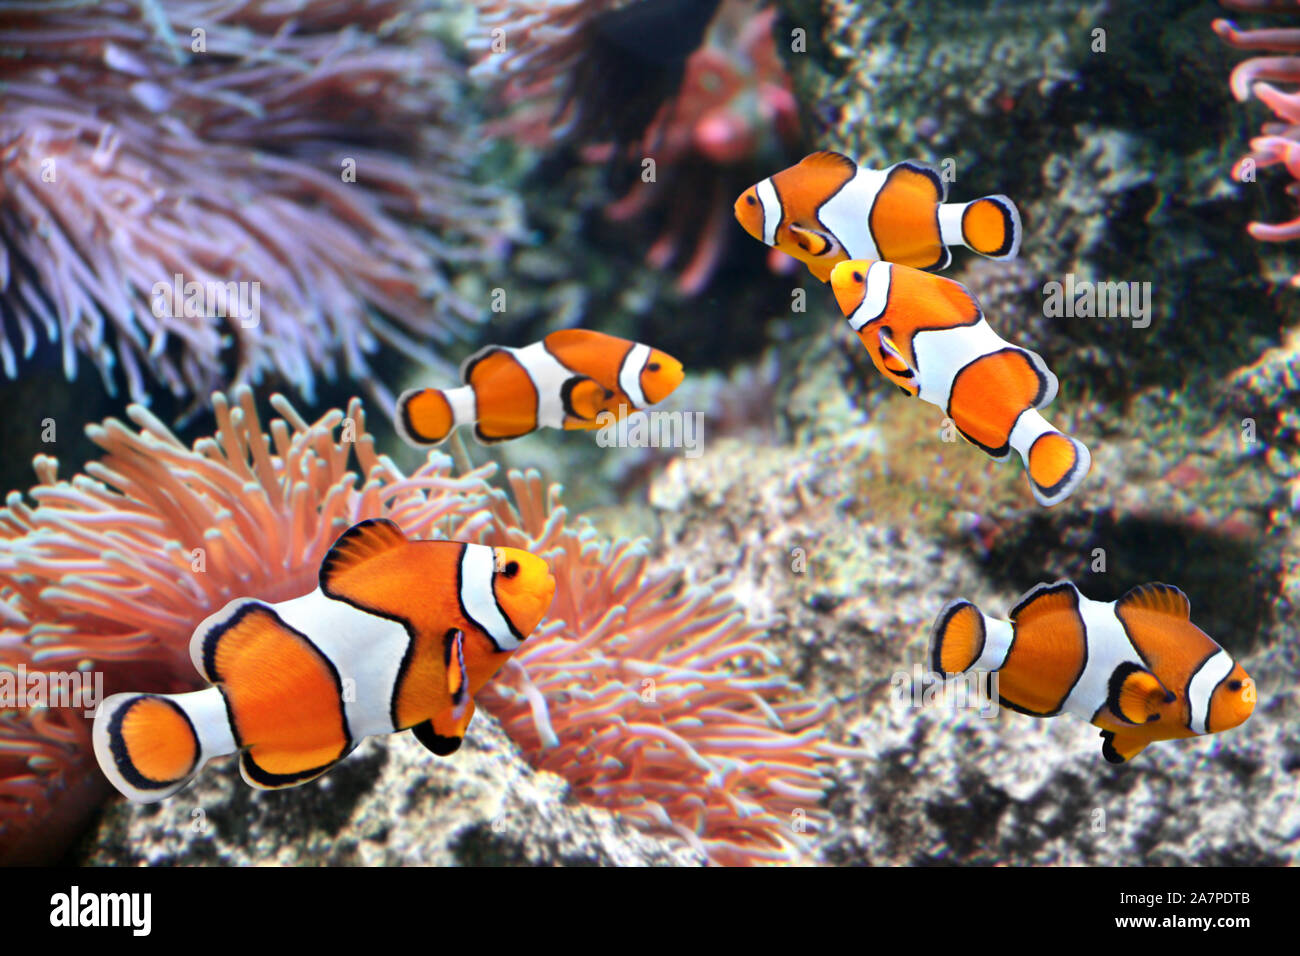 Tropical sea anemone and clown fish (Amphiprion percula) in marine aquarium Stock Photo